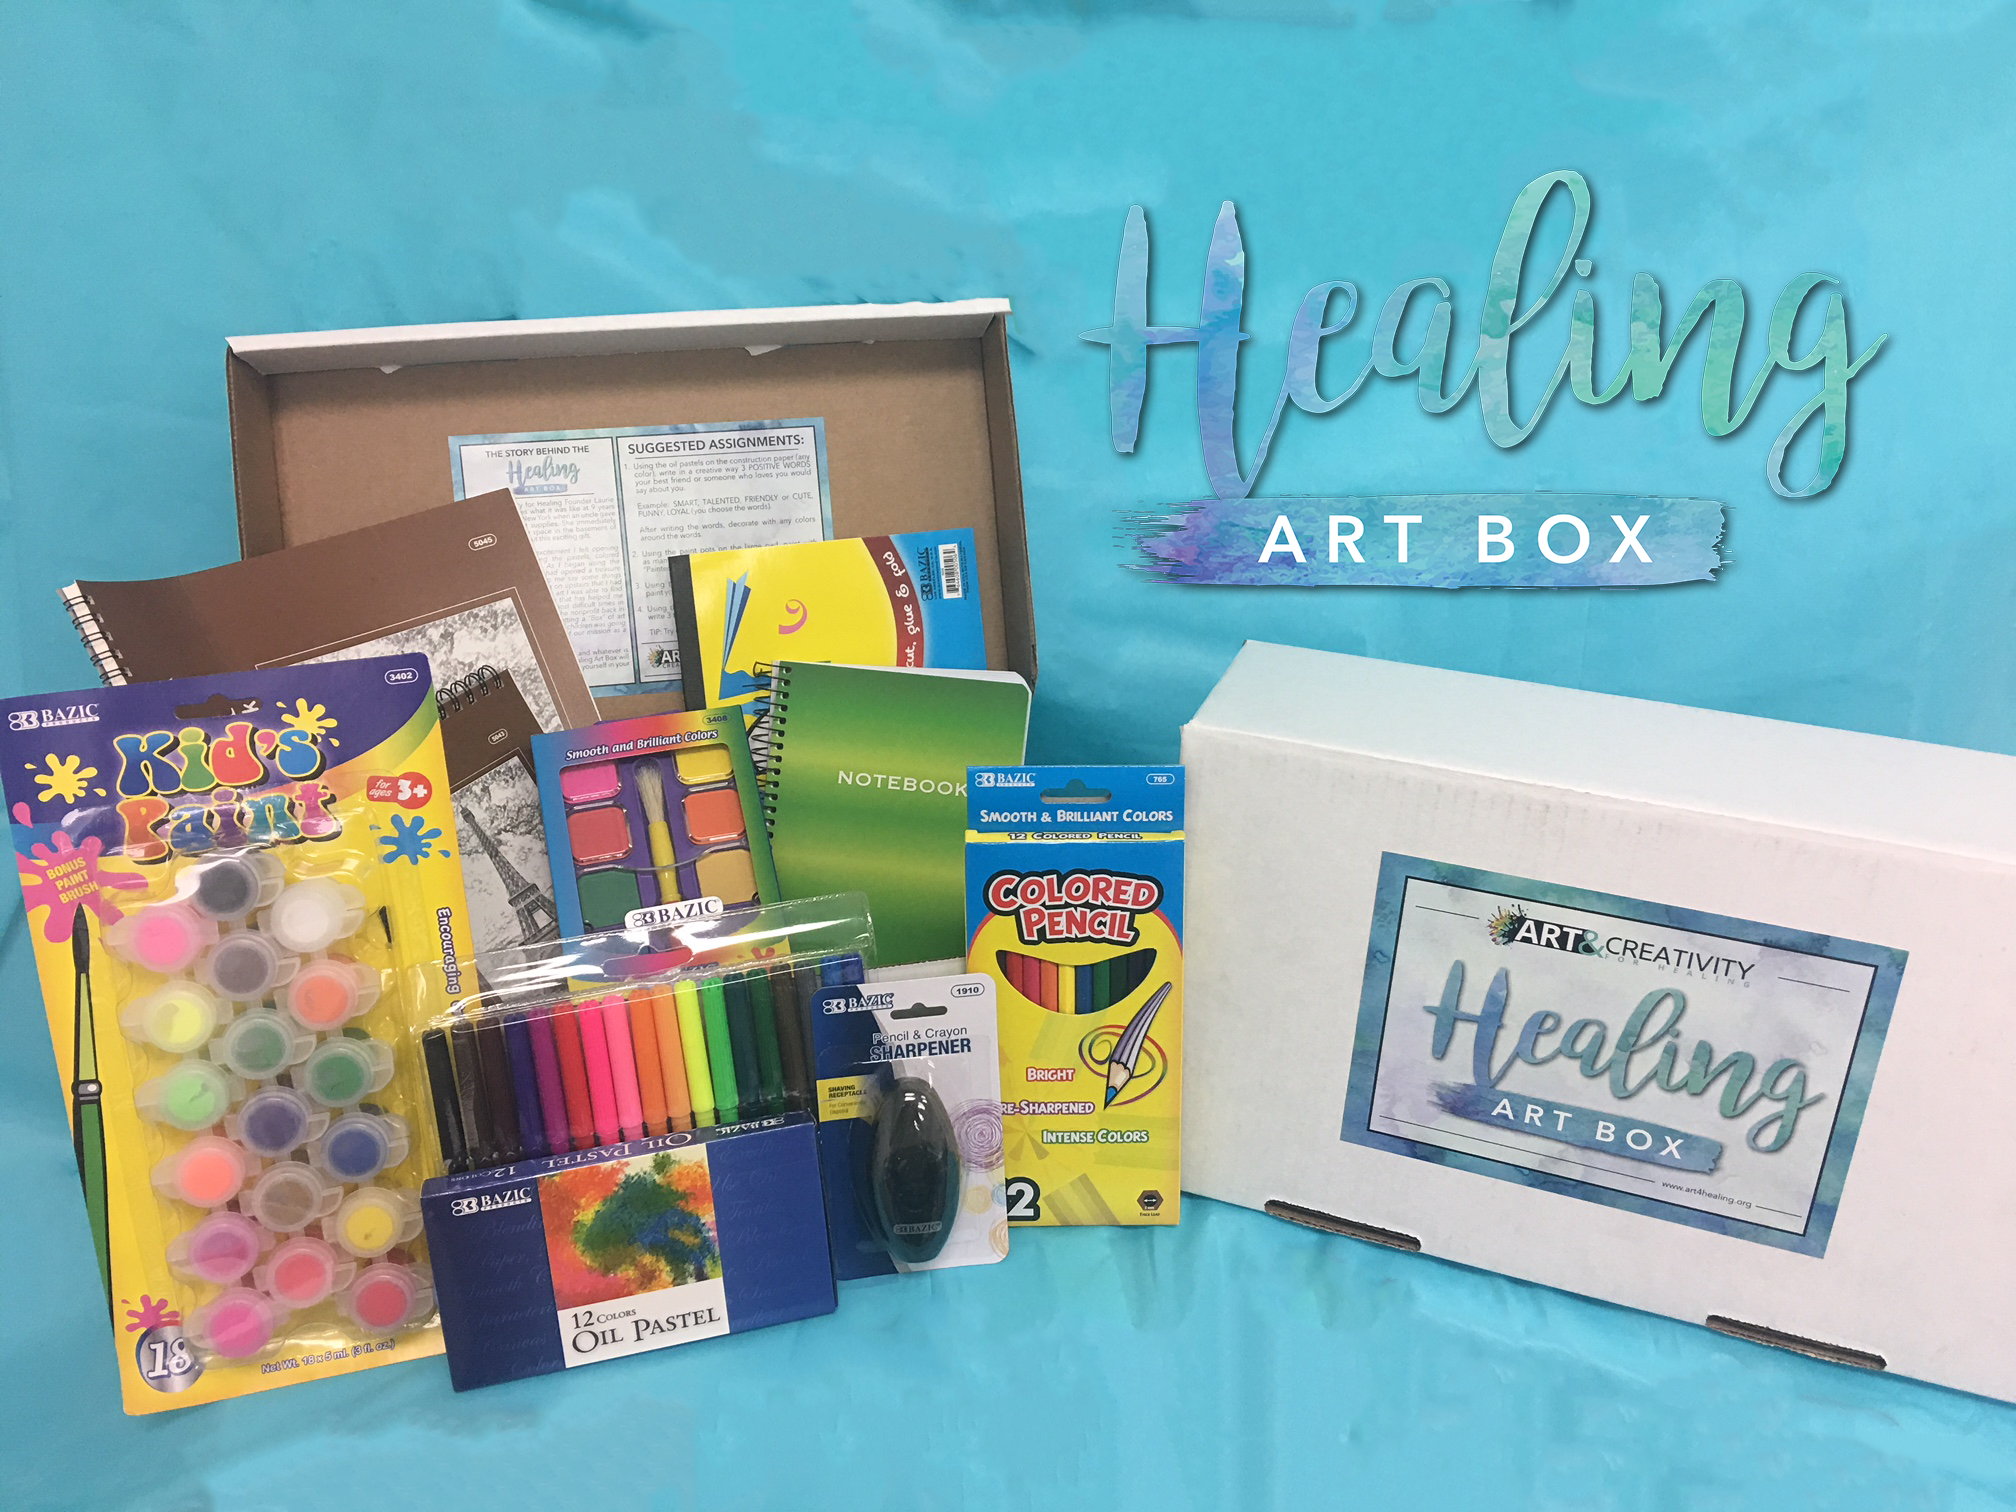 Healing Art Box Contents